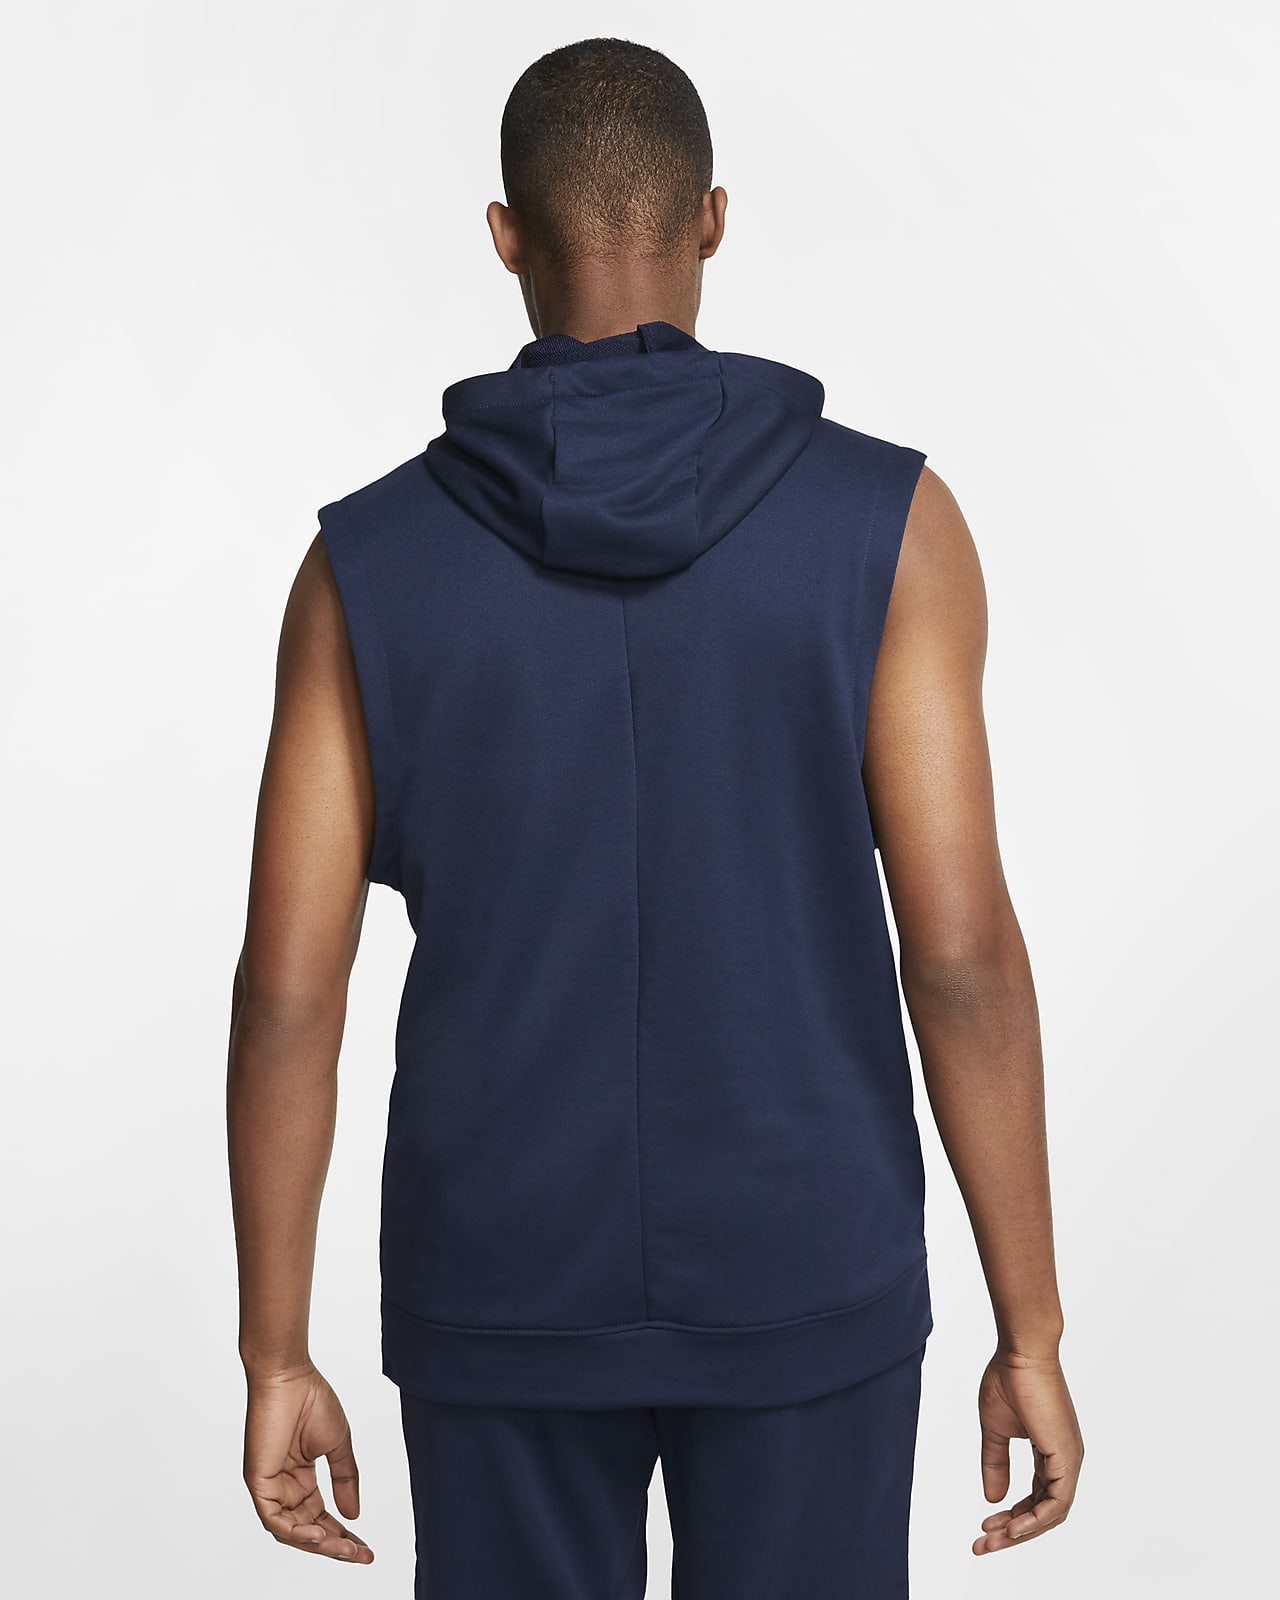 Nike Dri-FIT Men's Sleeveless Pullover 